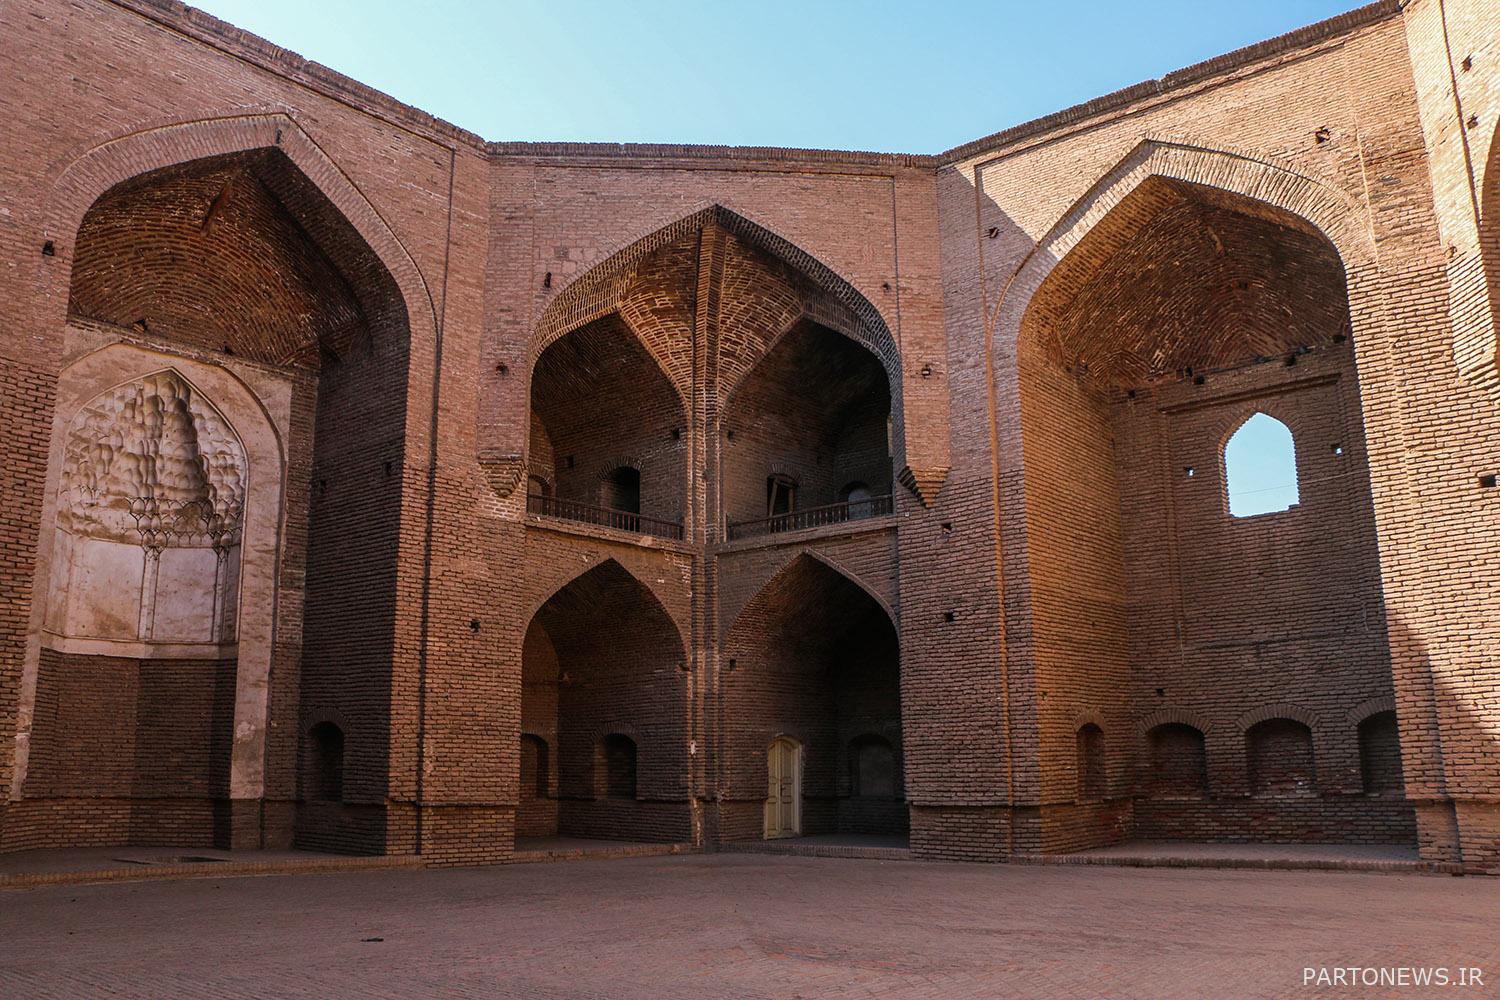 Khoi historical market, a building left over from the Safavid era with 5 caravanserais